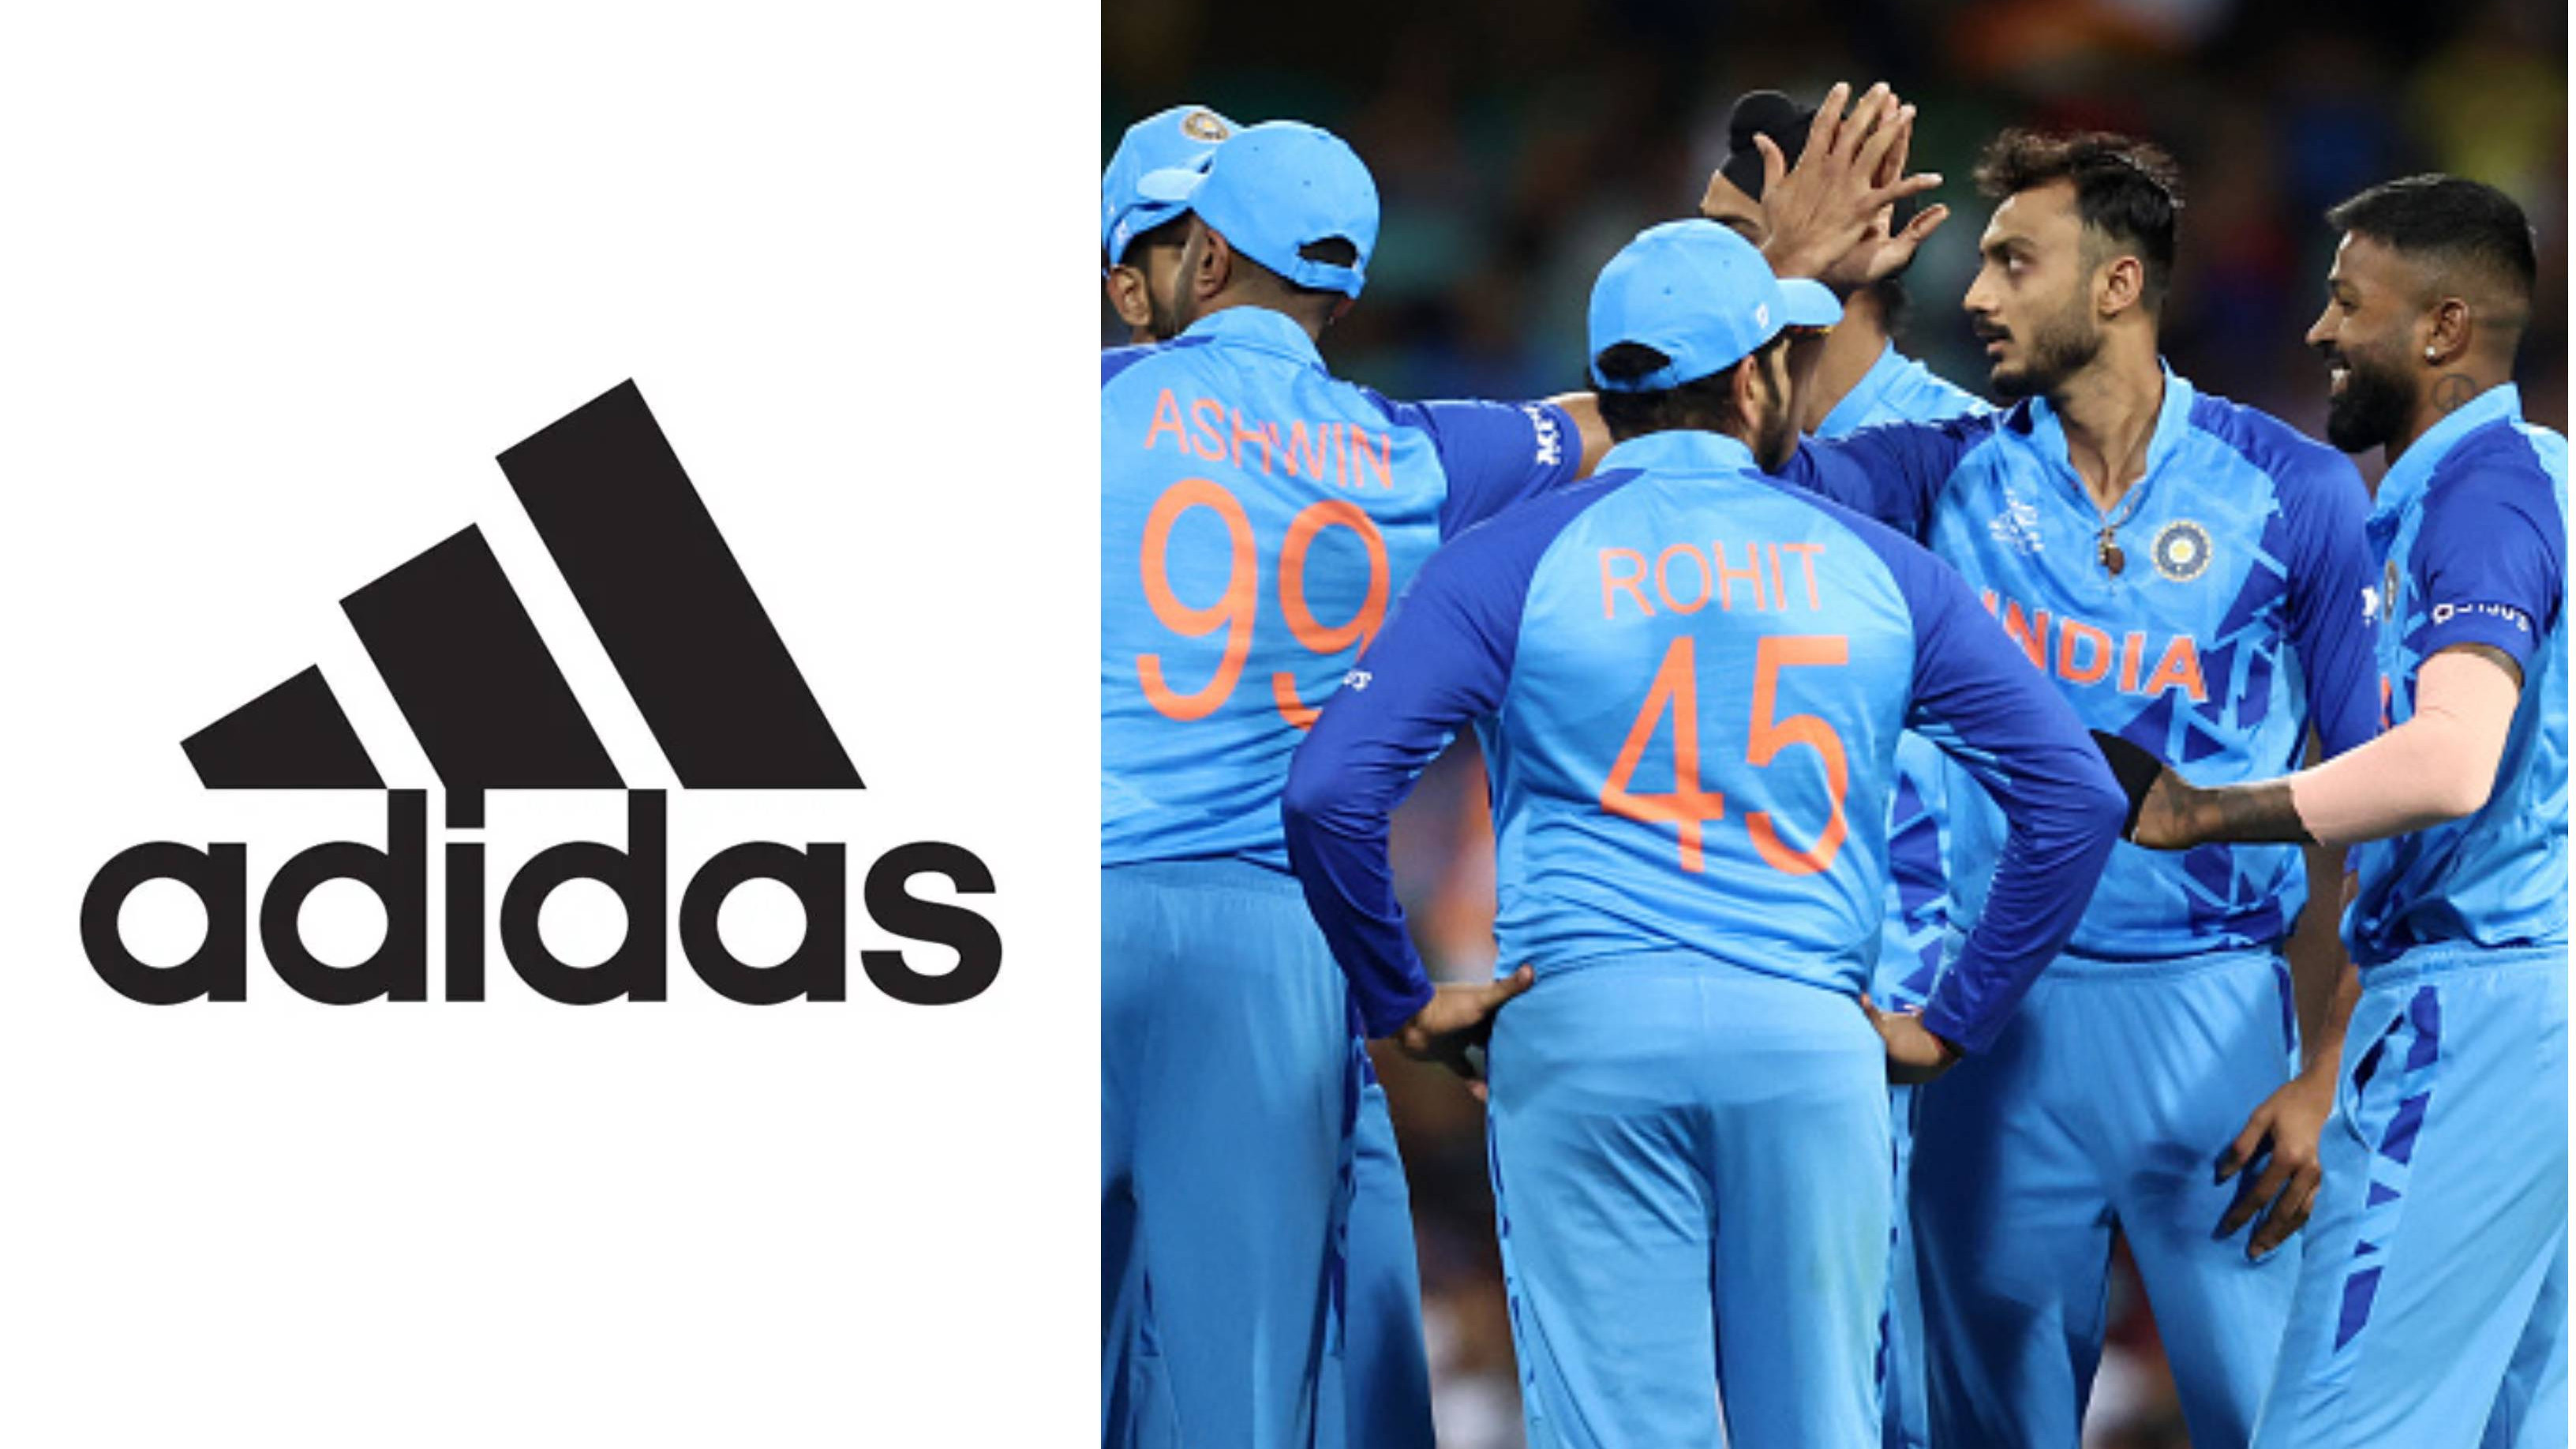 Adidas to sponsor Indian cricket team's kit, confirms BCCI Secretary Jay Shah